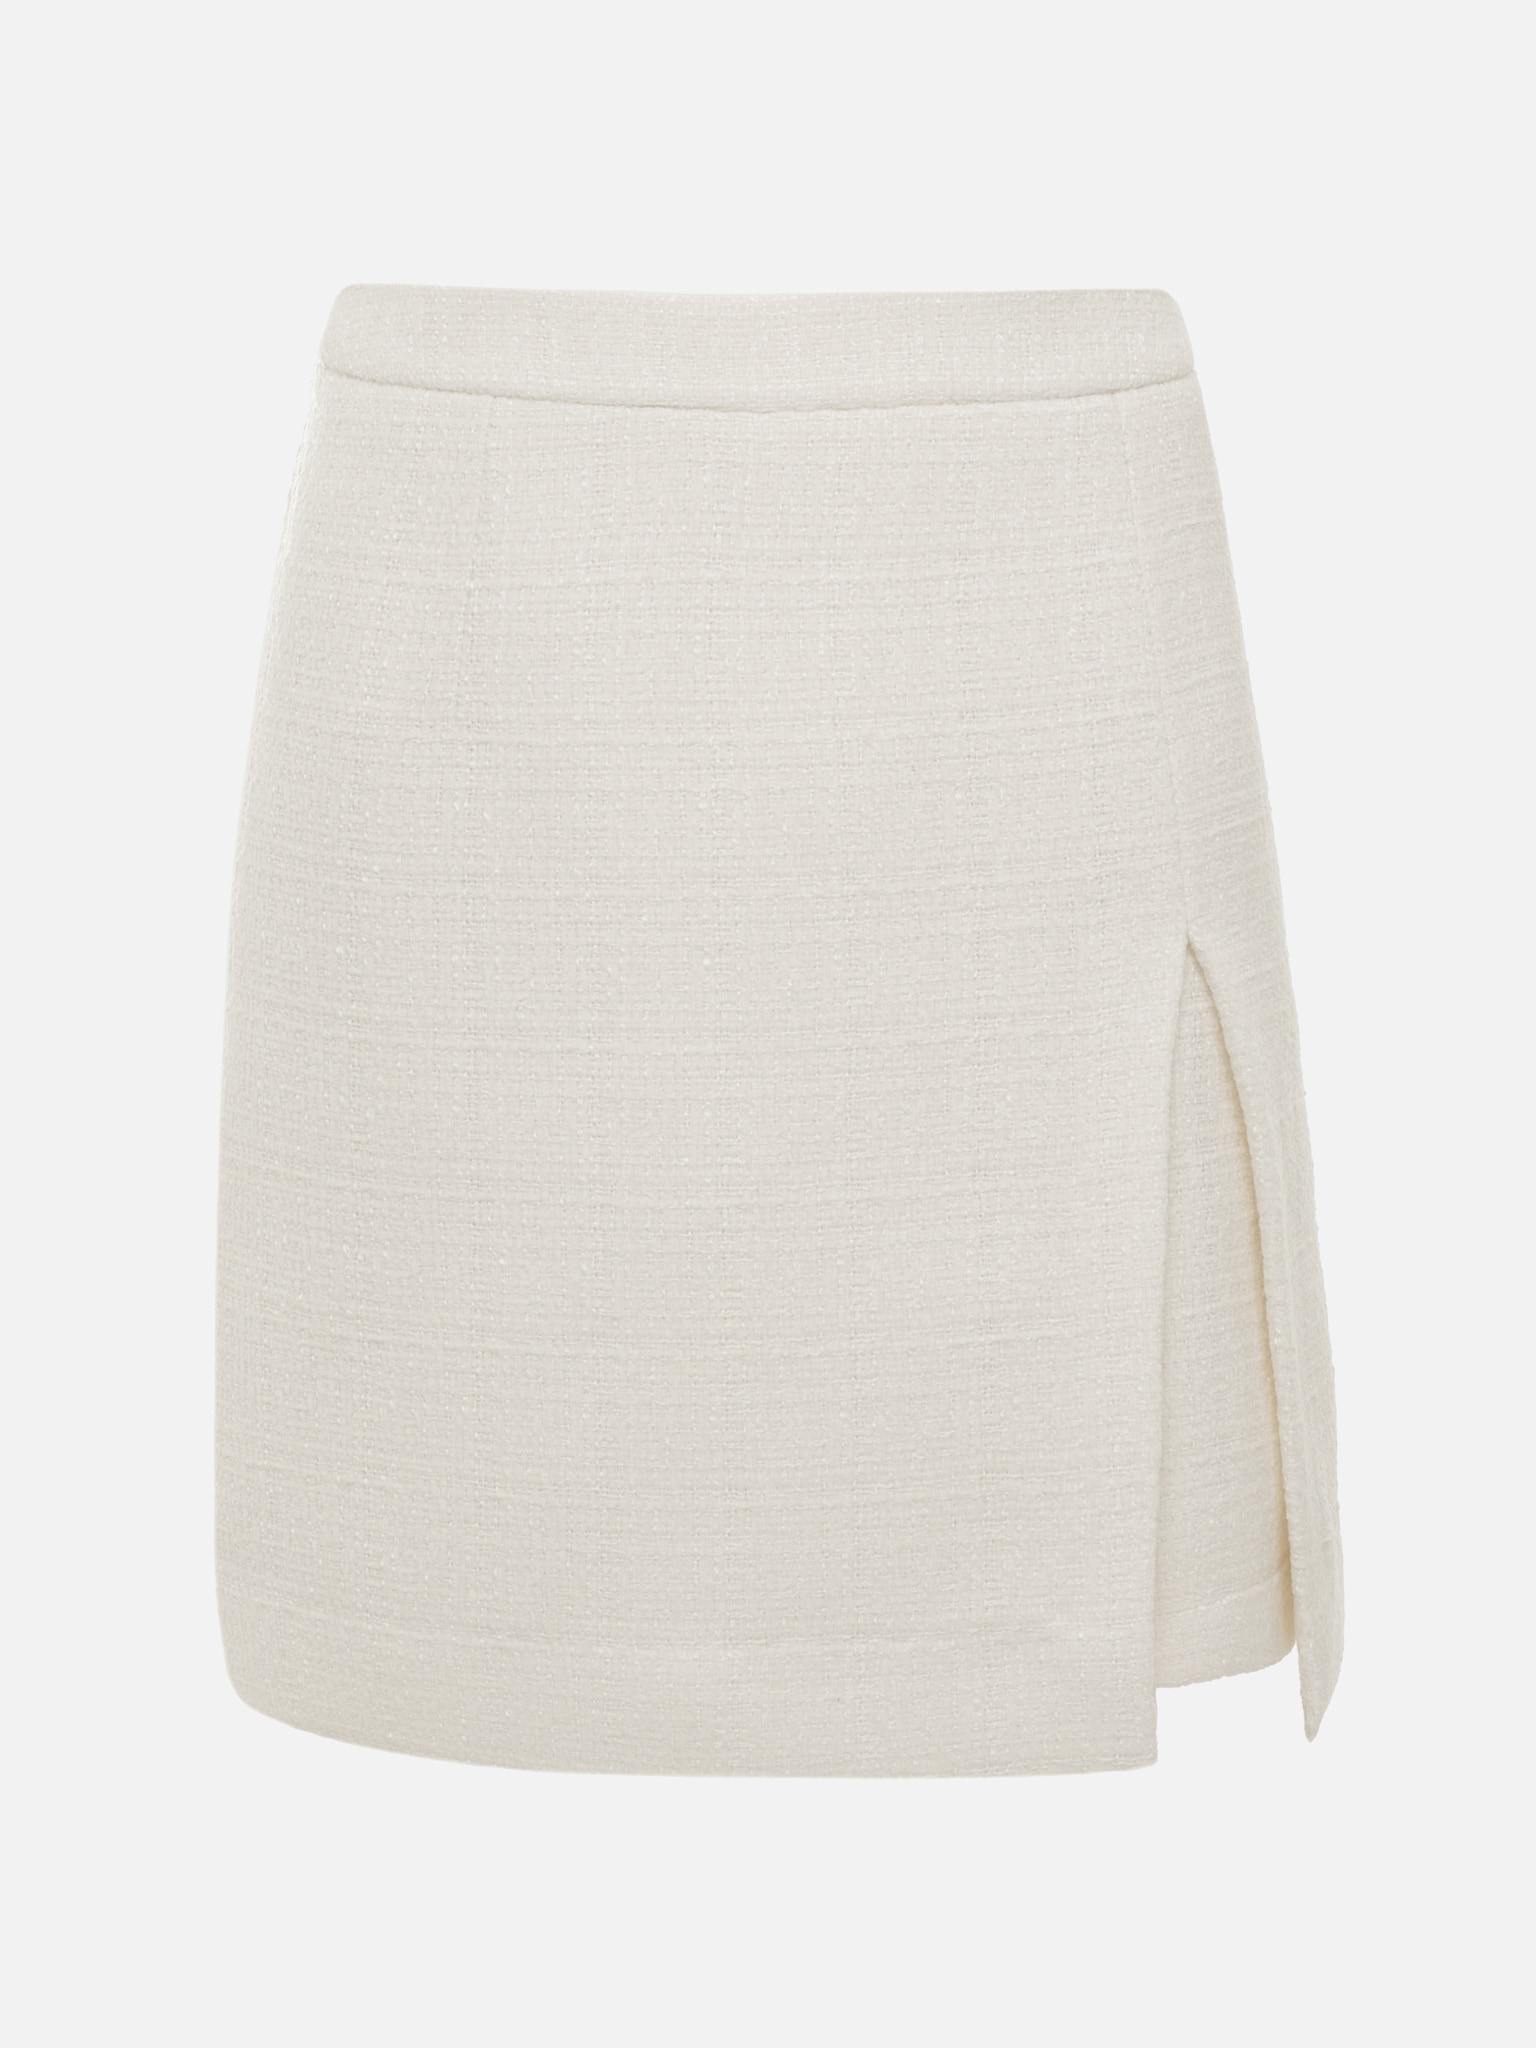 Tweed mini skirt with a slit